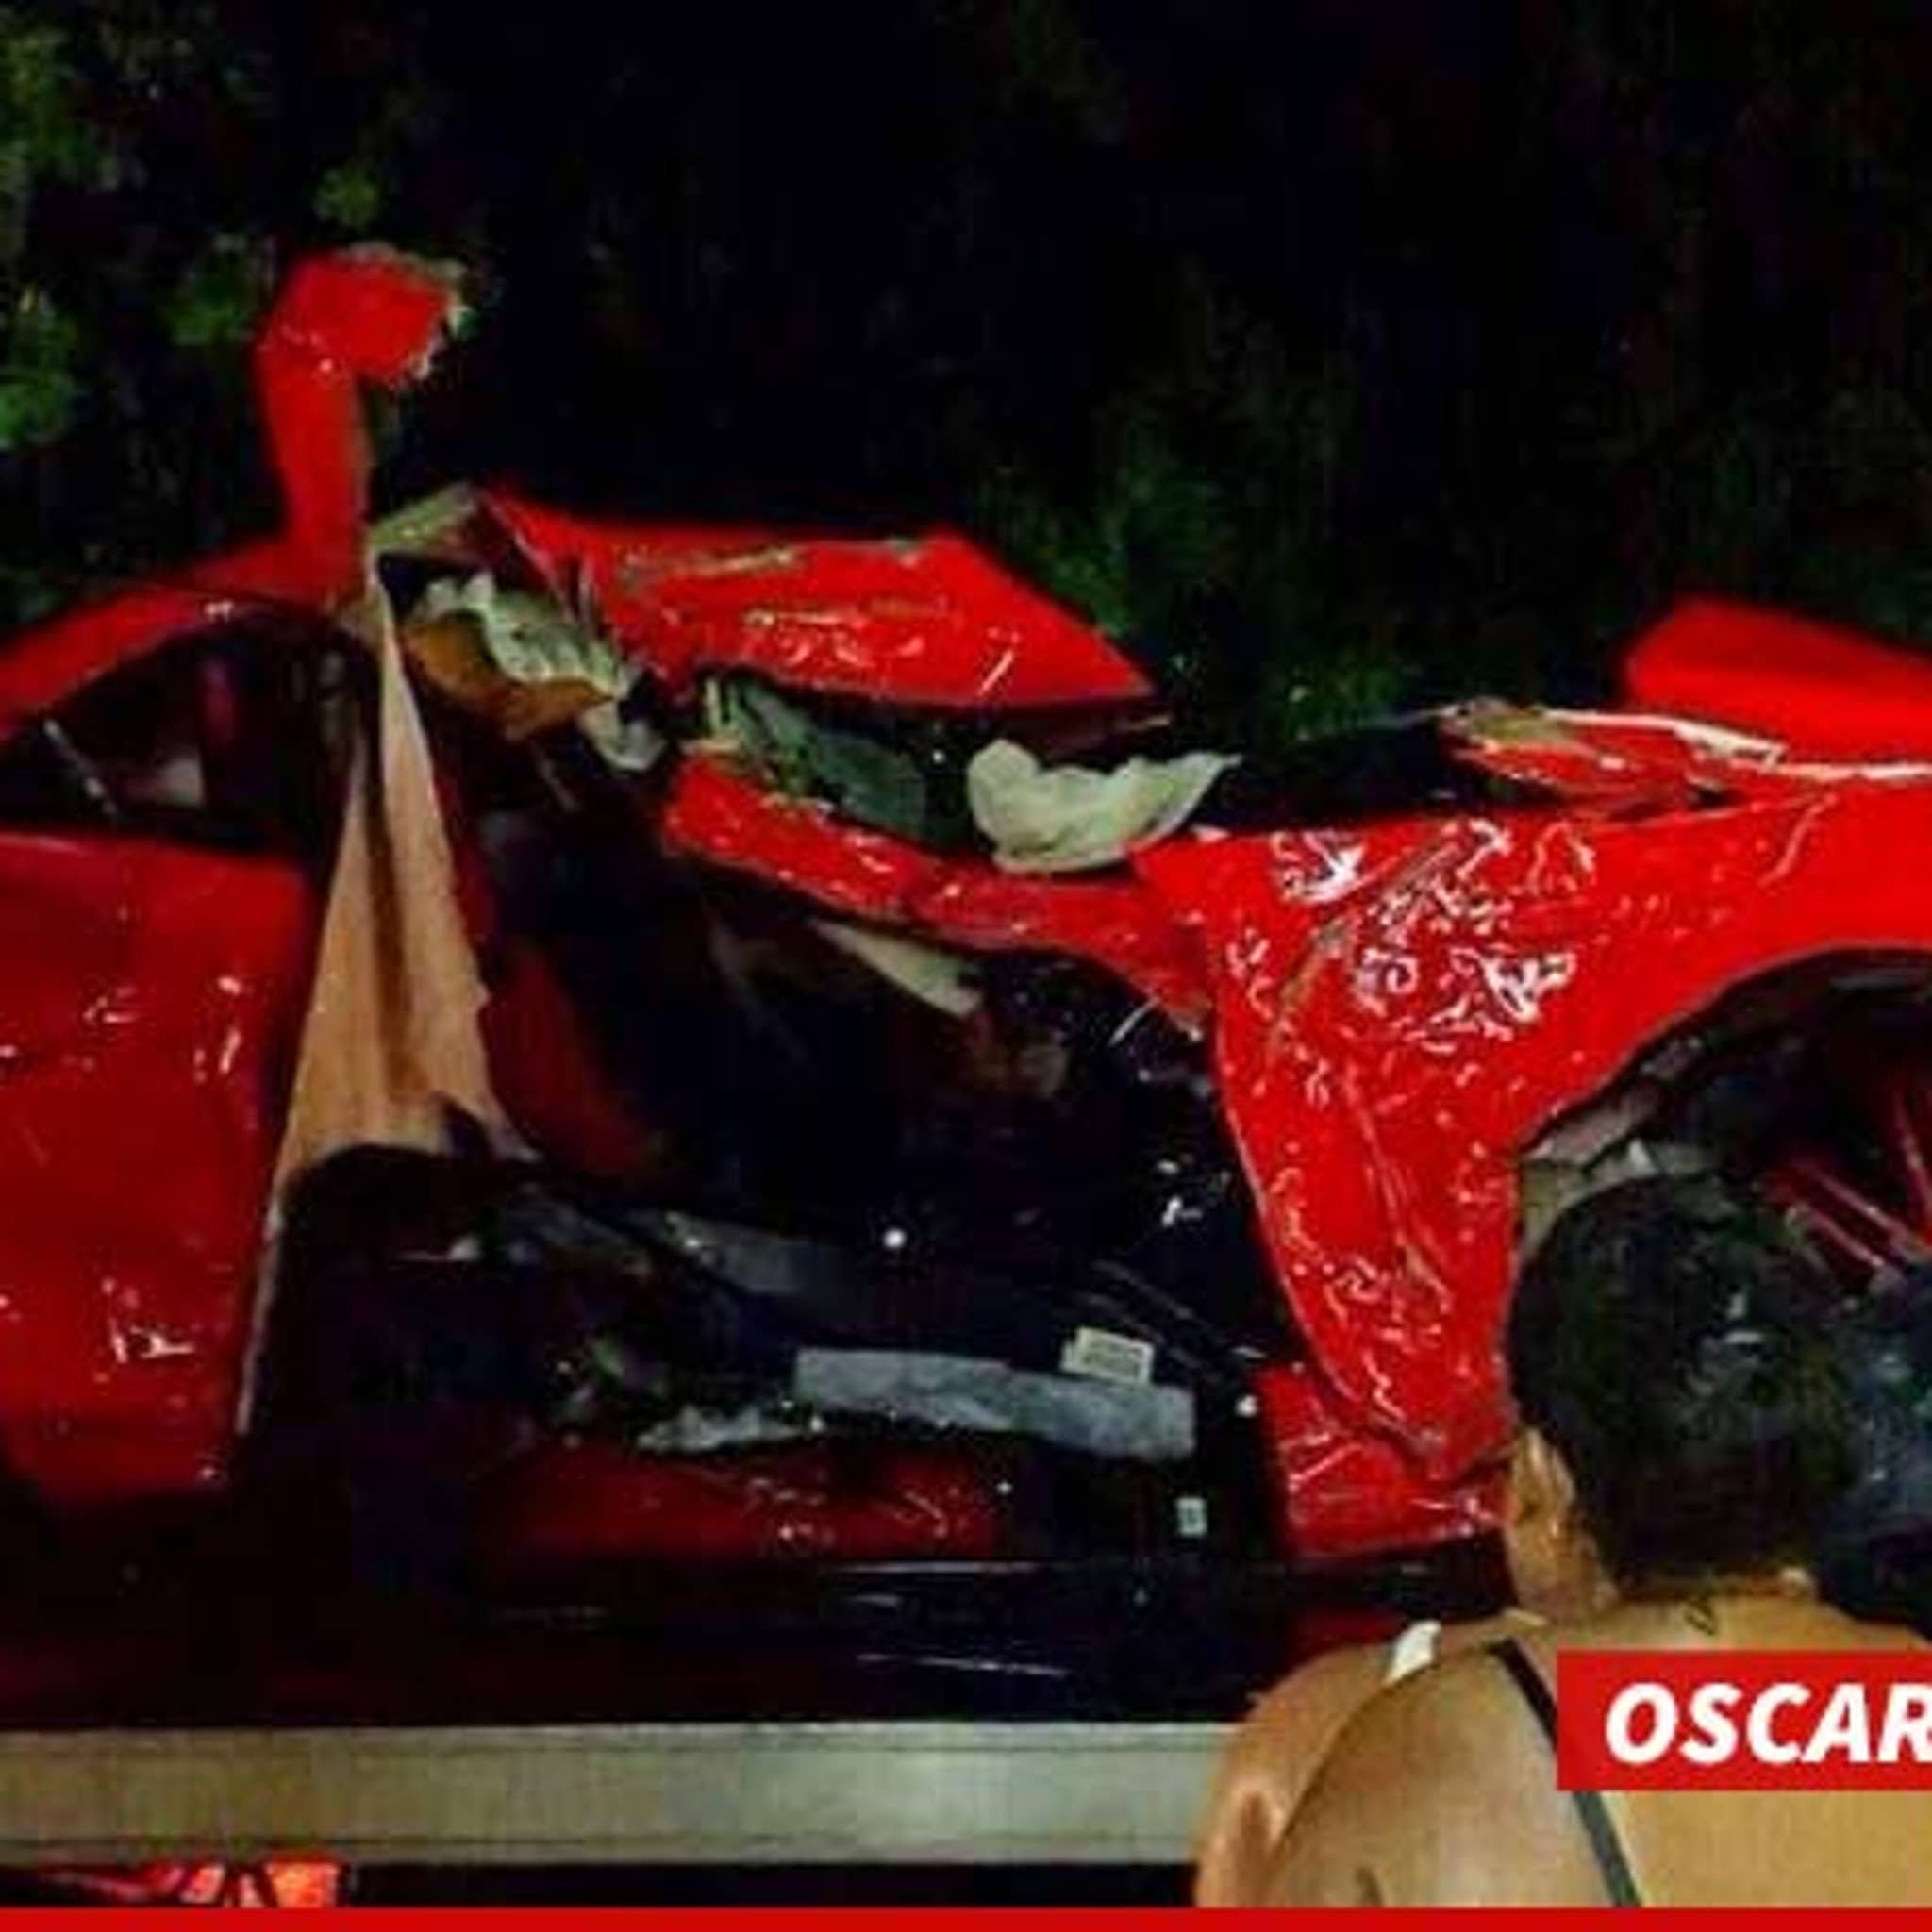 Cardinals Player Oscar Taveras, Girlfriend Killed in Car Crash